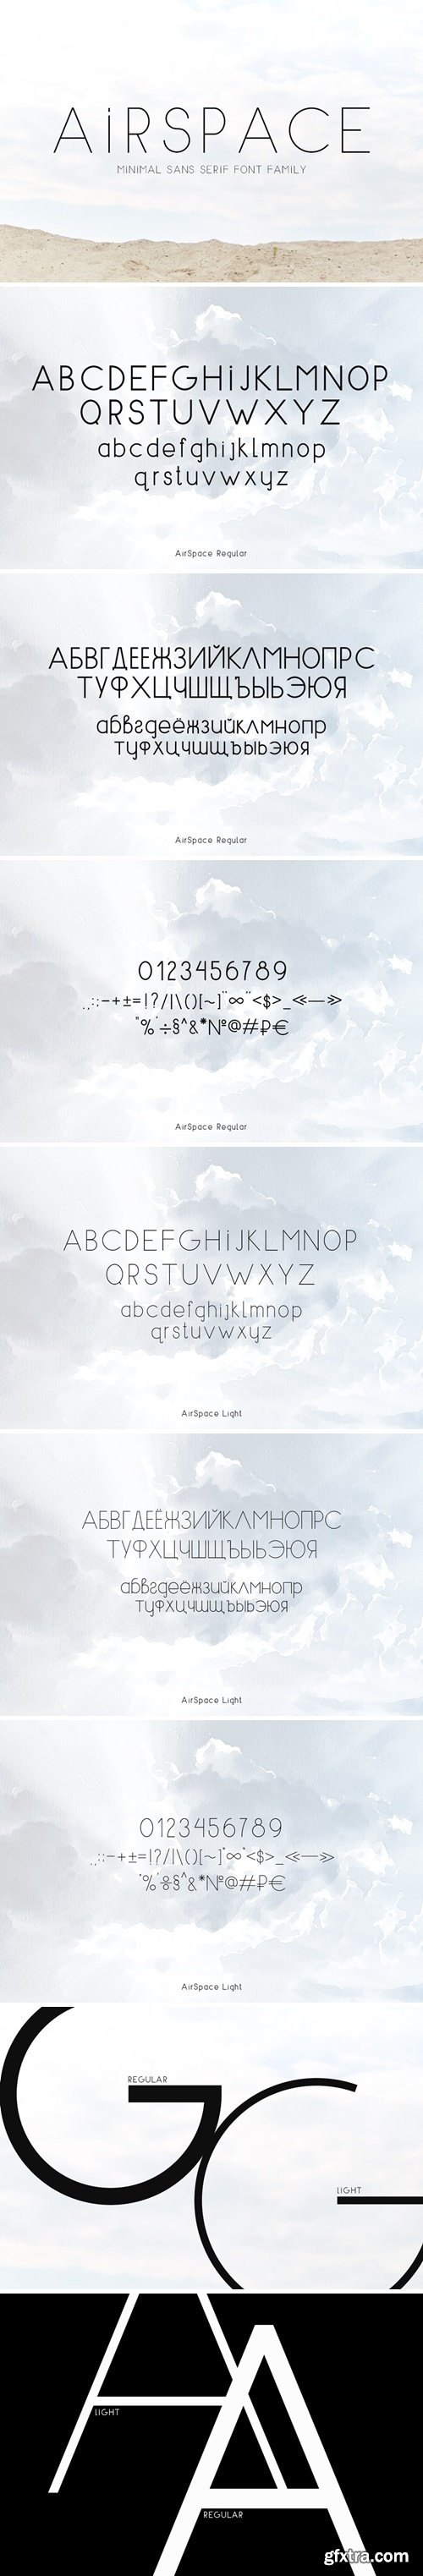 CreativeMarket - AIRSPACE | Minimal Sans Serif Font 3467019